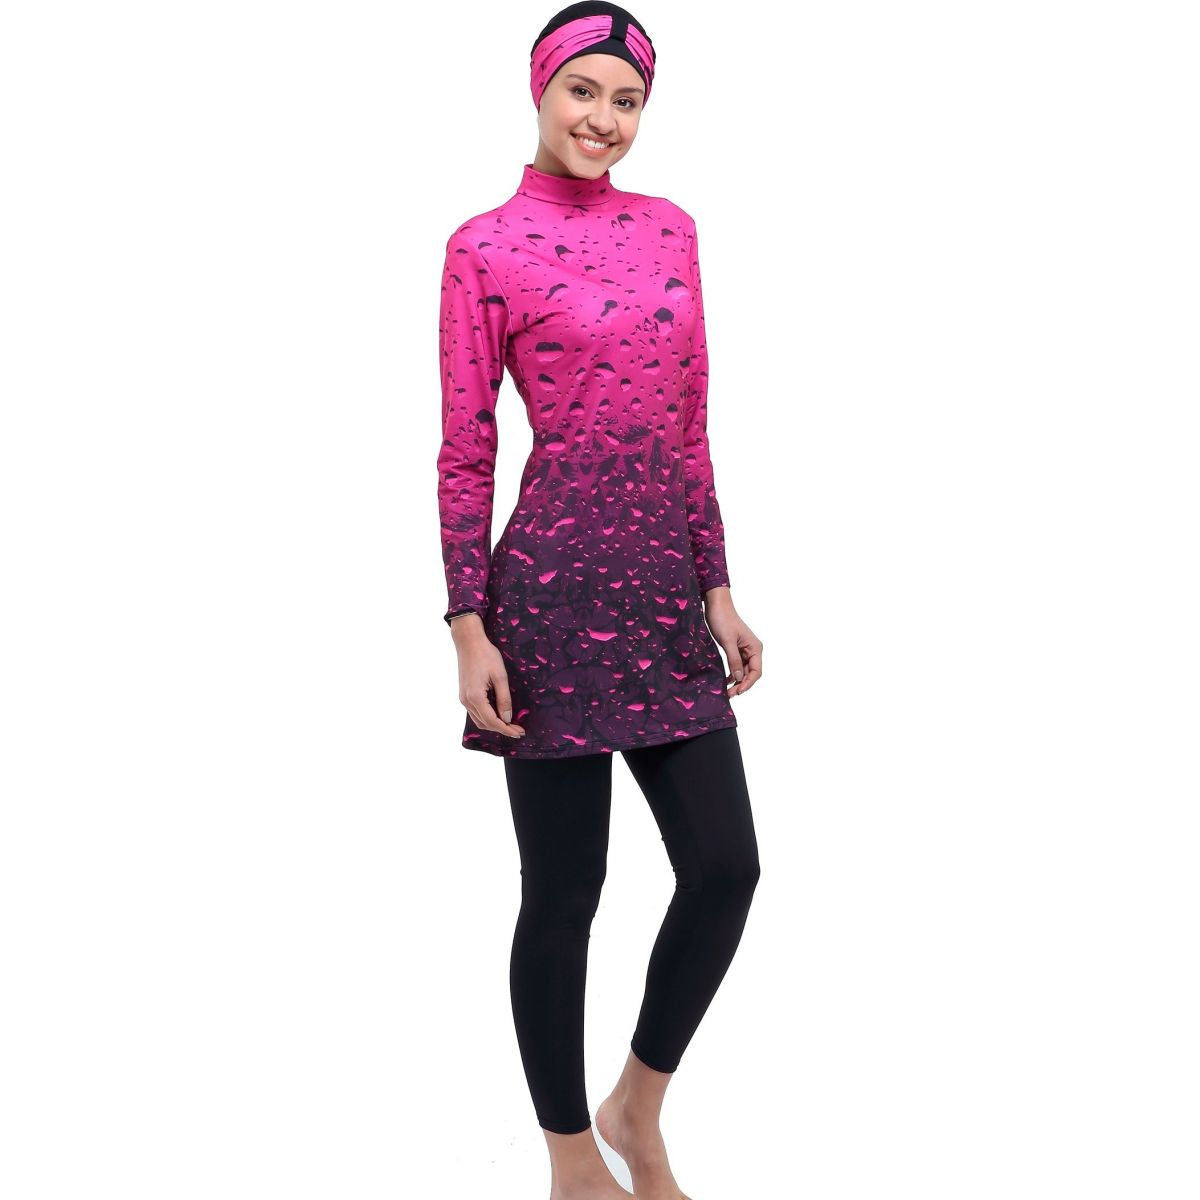 Argisa 7542 Long Sleeve Board Patterned Full Hijab Swimwear 36-44 Muslim Hijab Islamic Swimsuit Burkini Turkey Full Cover Swim Hat